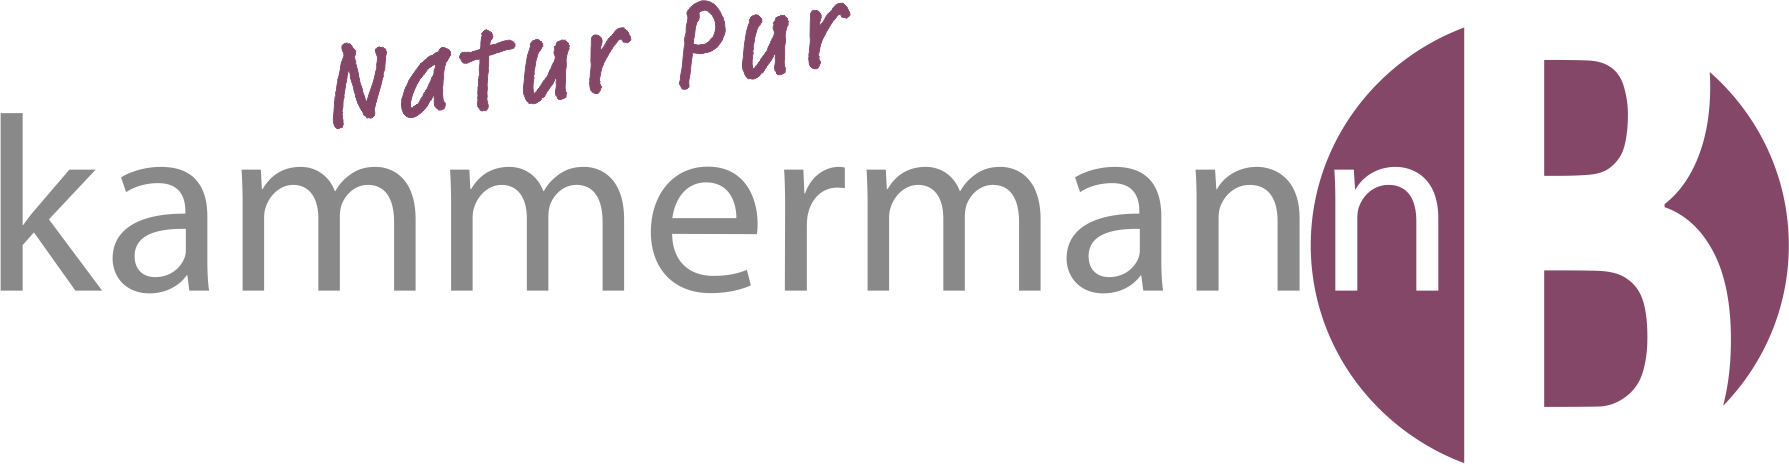 Kammermann - Natur Pur